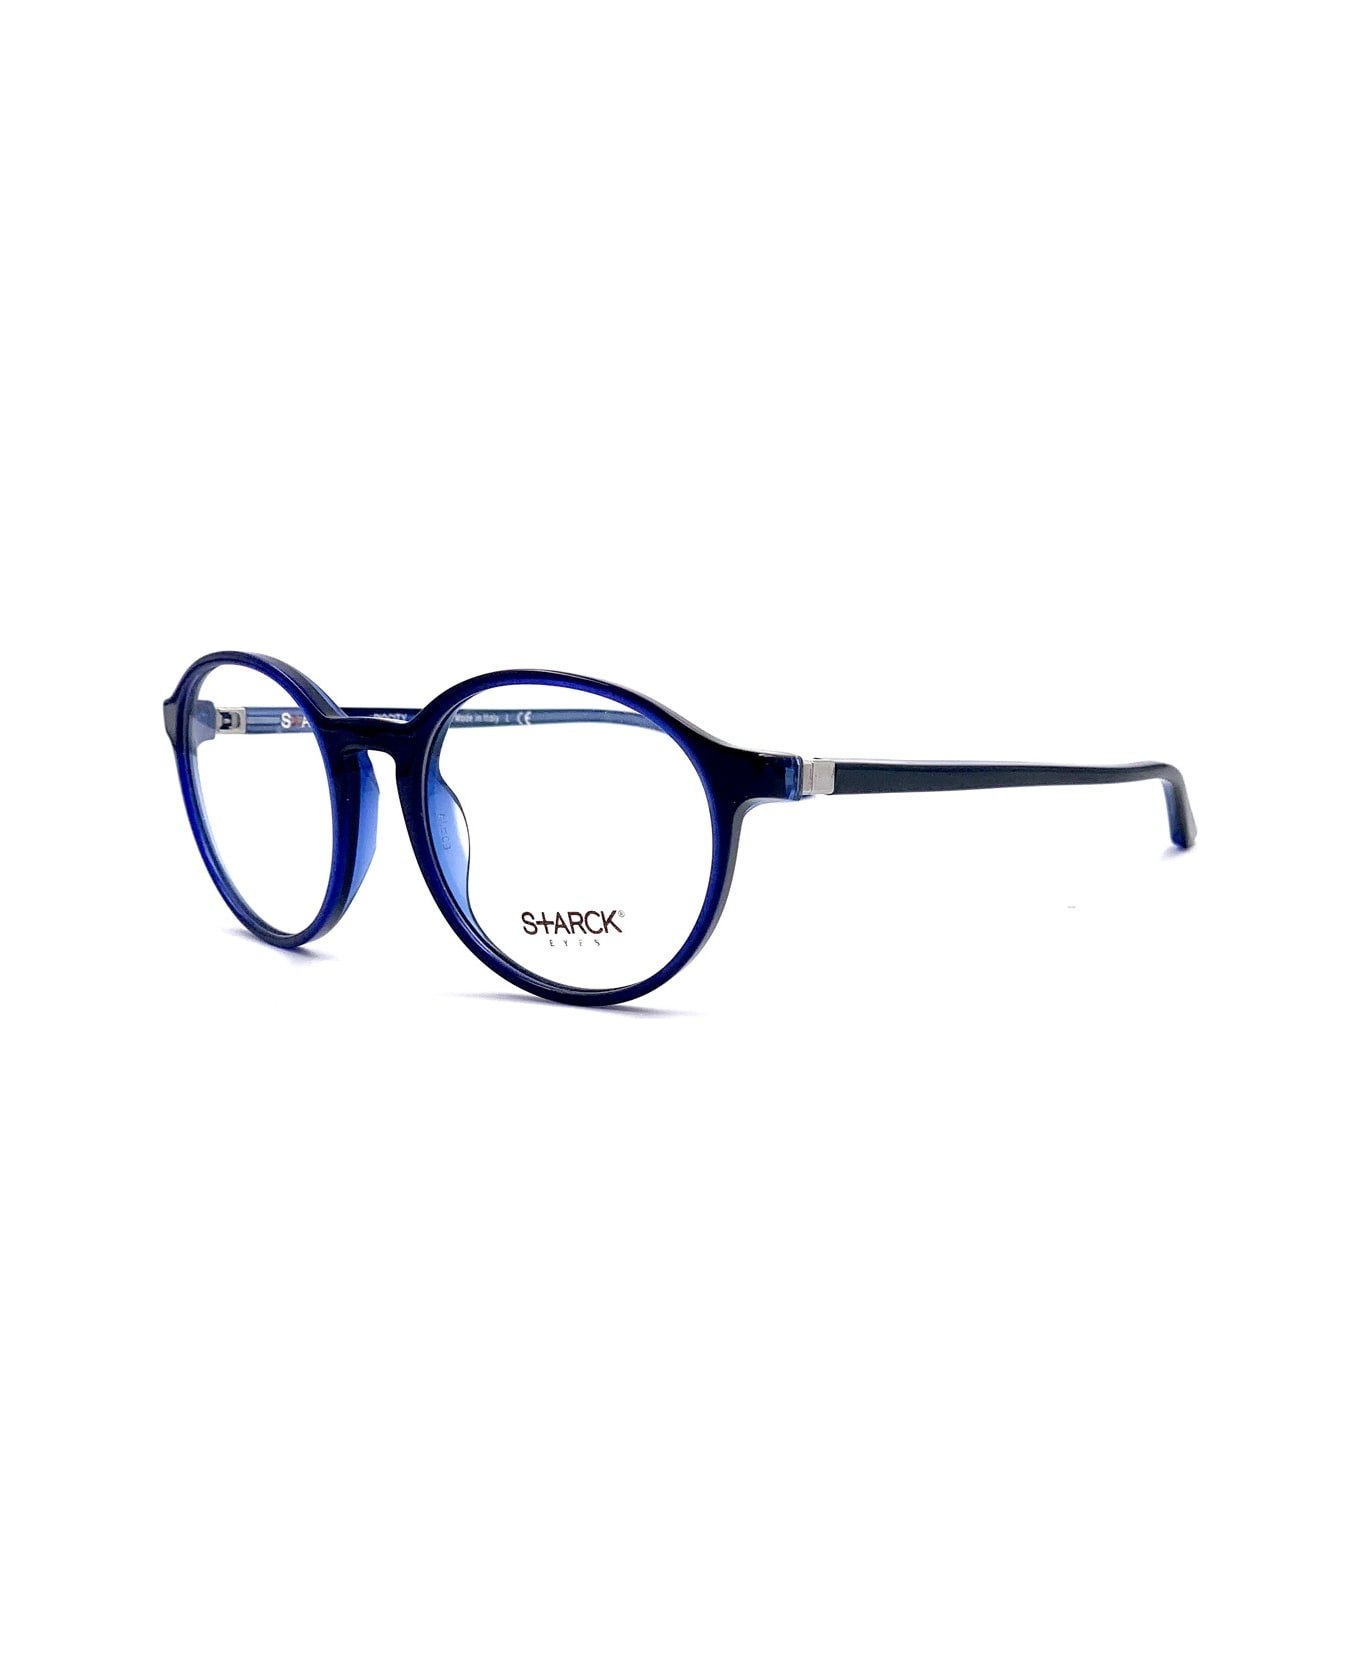 Philippe Starck 3035 Vista Glasses - Blu